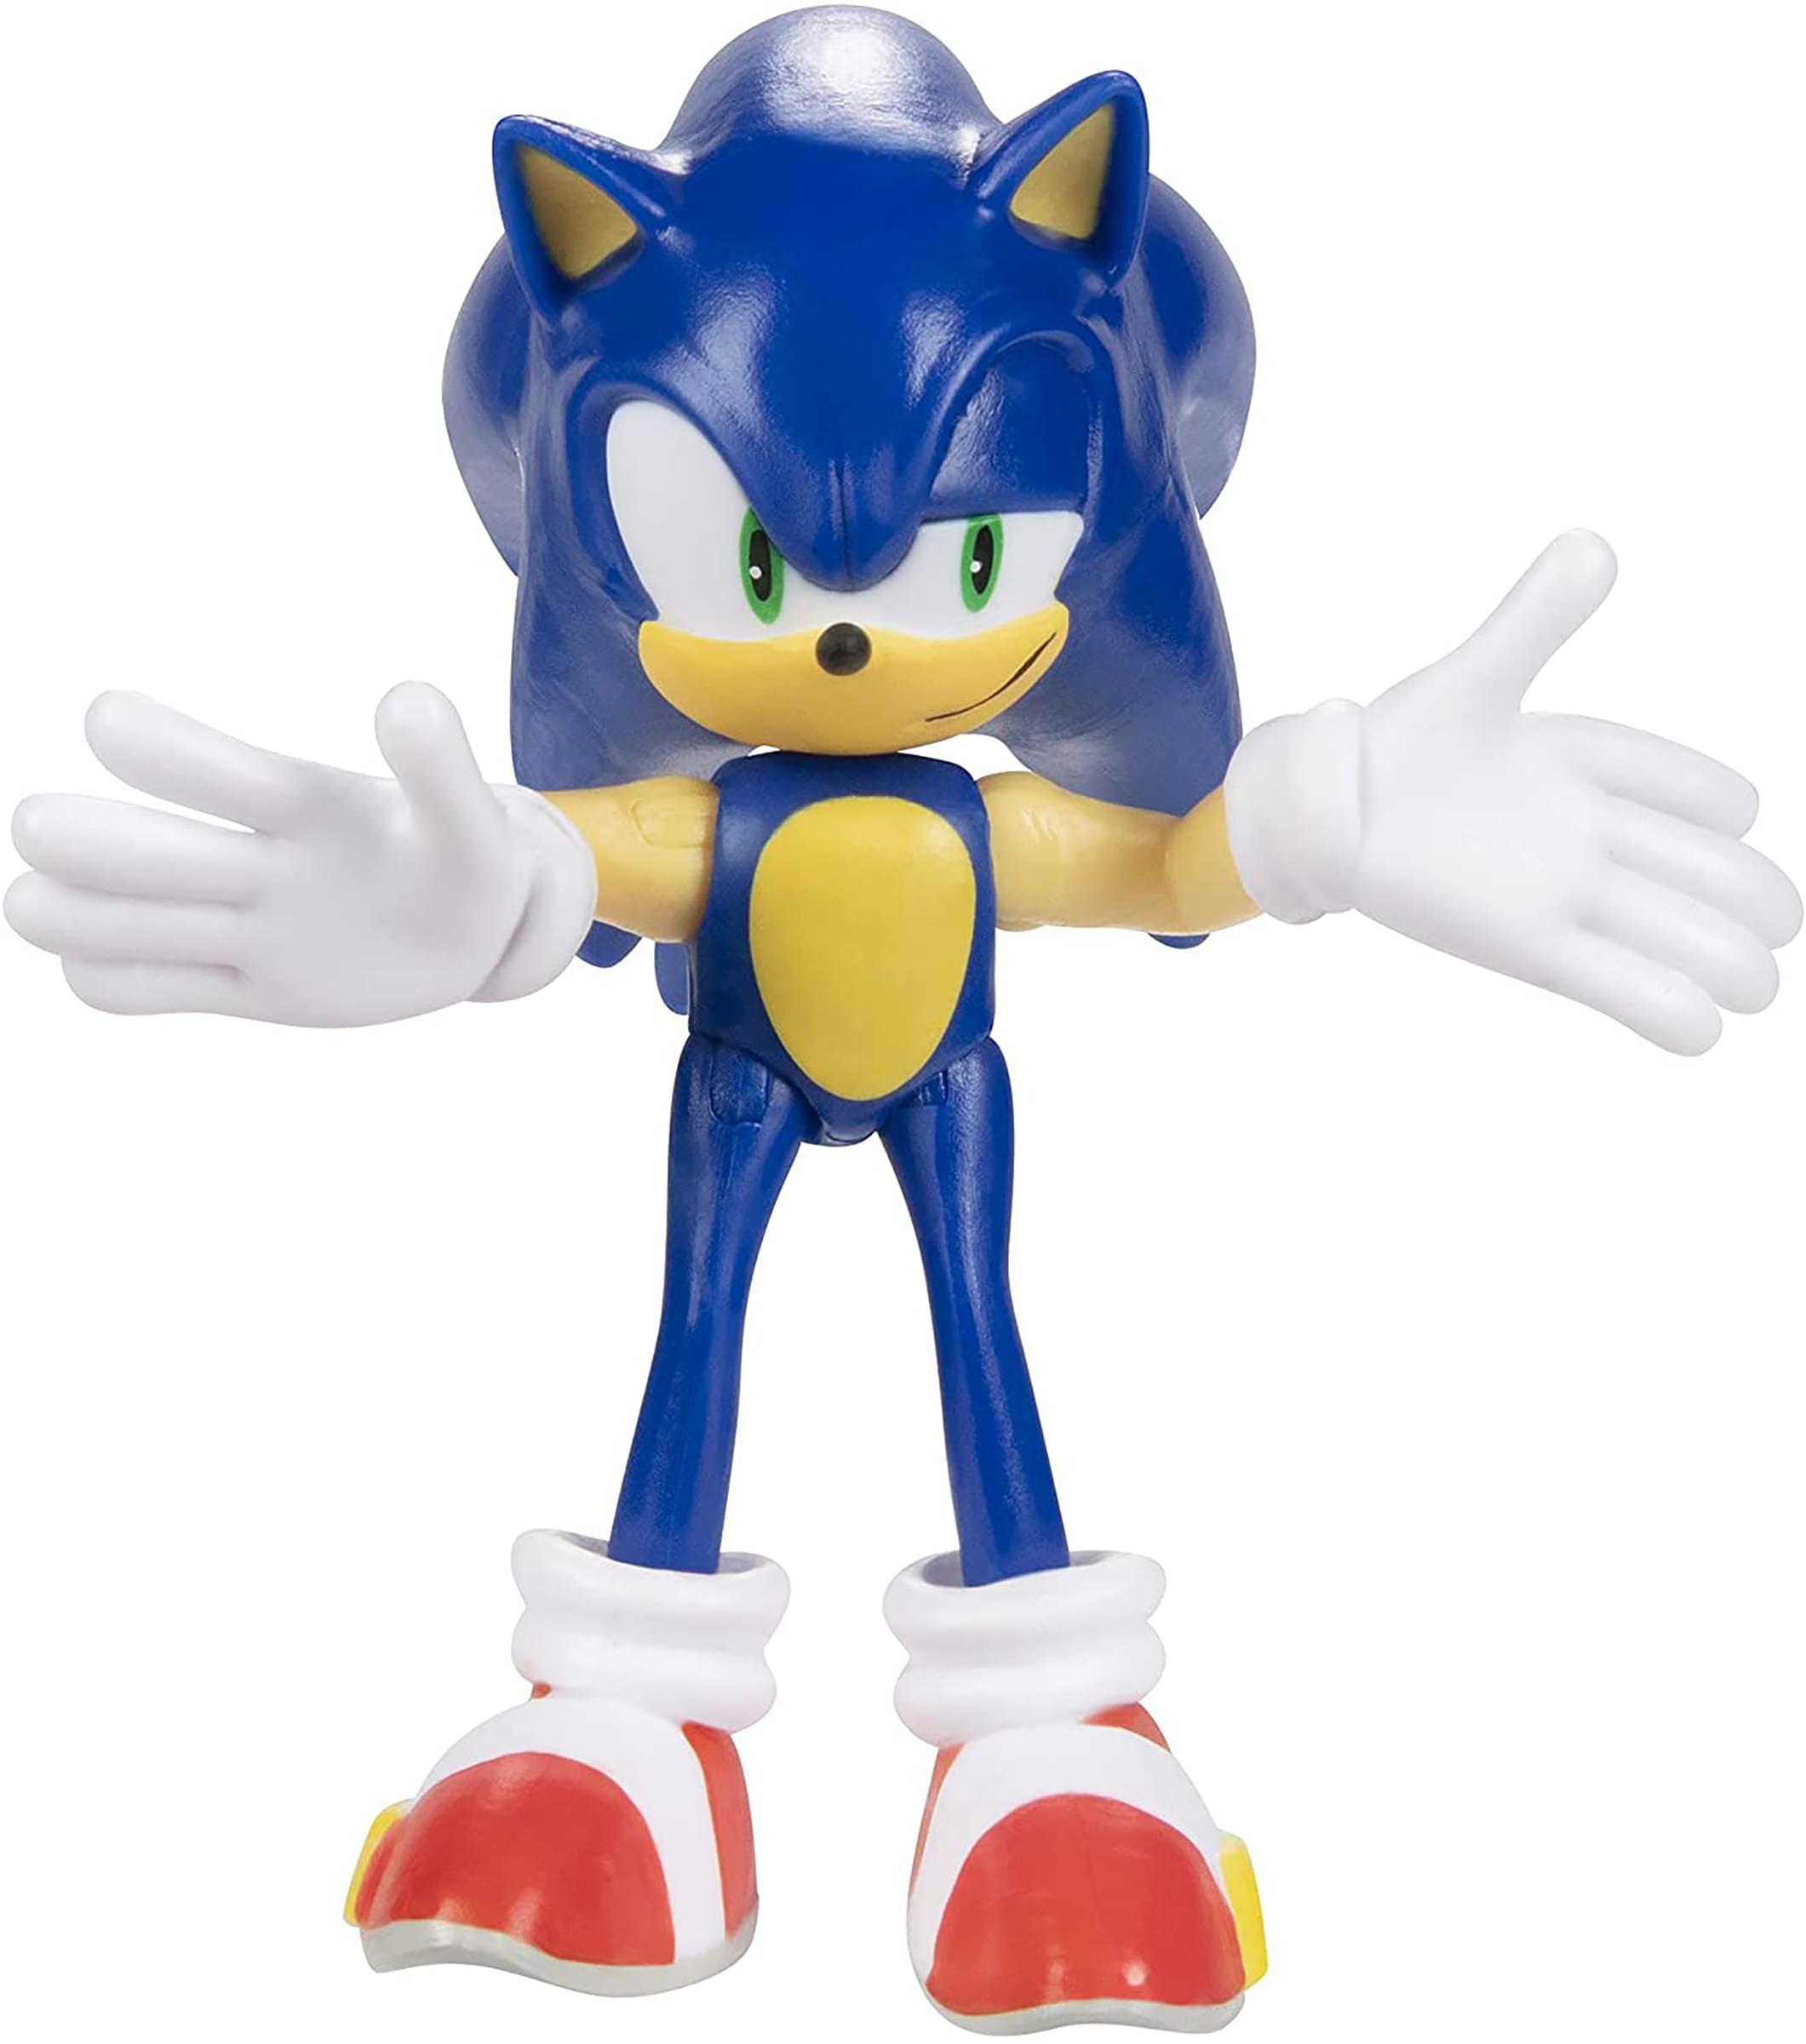 Boneco Action Figure Sonic The Hedgehog c/ acessórios - Just Toys